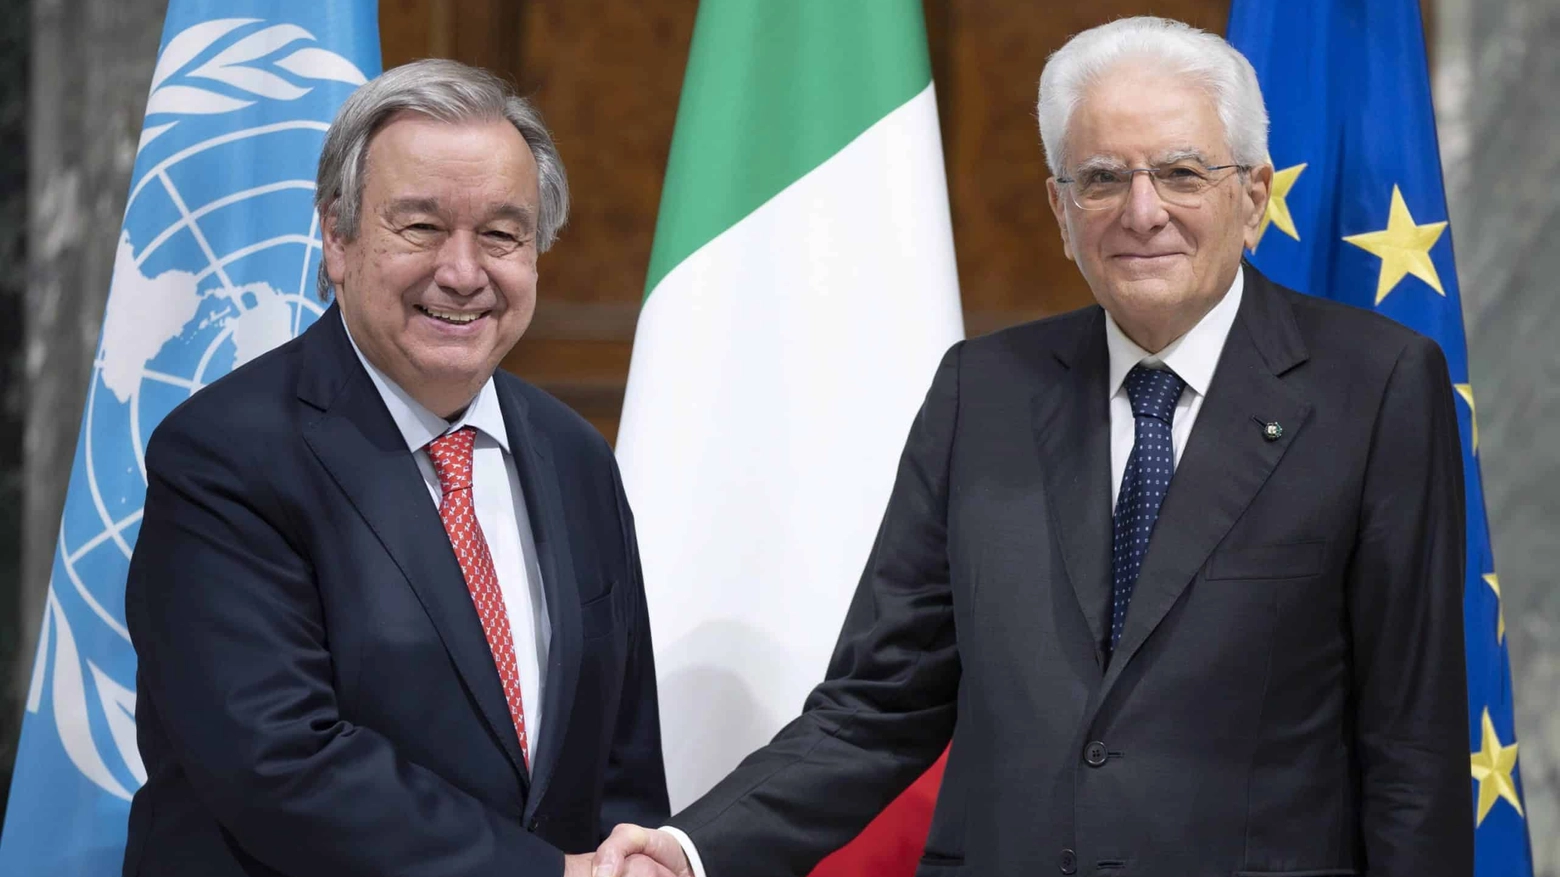 Italian President Mattarella receives UN Secretary General Guterres in Rome